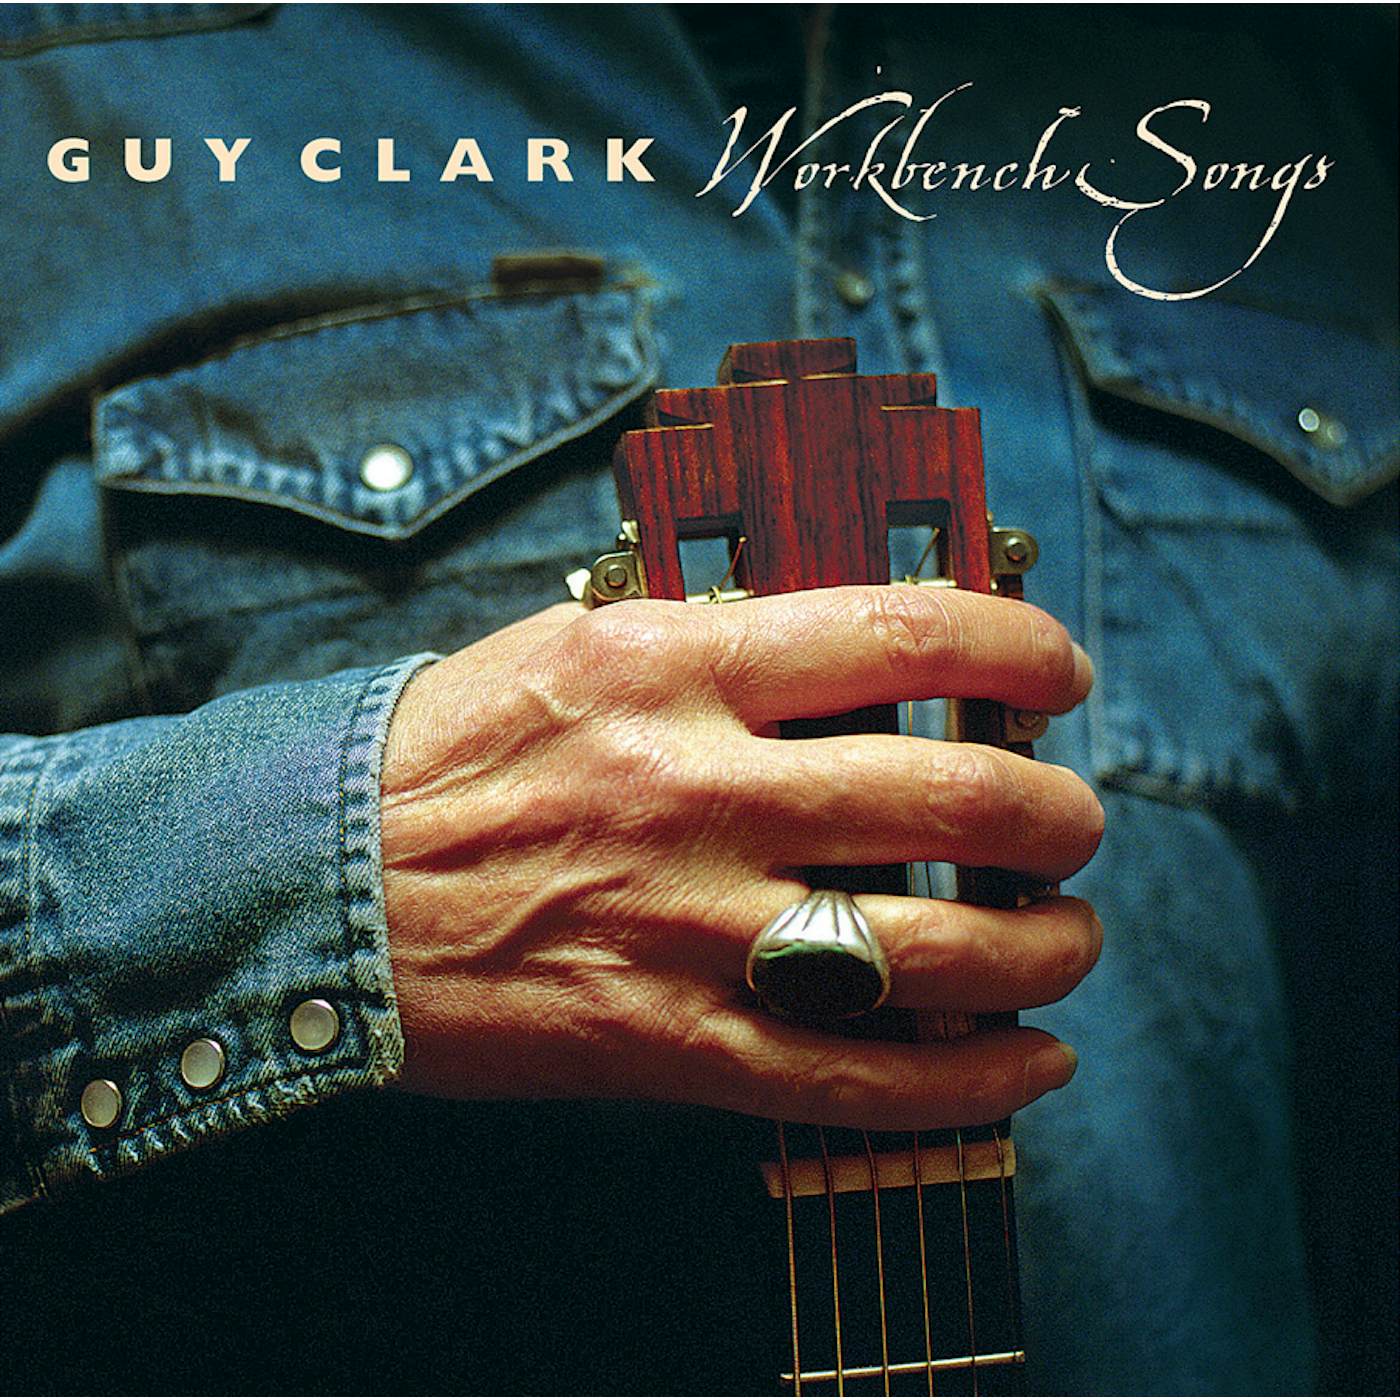 Guy Clark Workbench Songs Vinyl Record